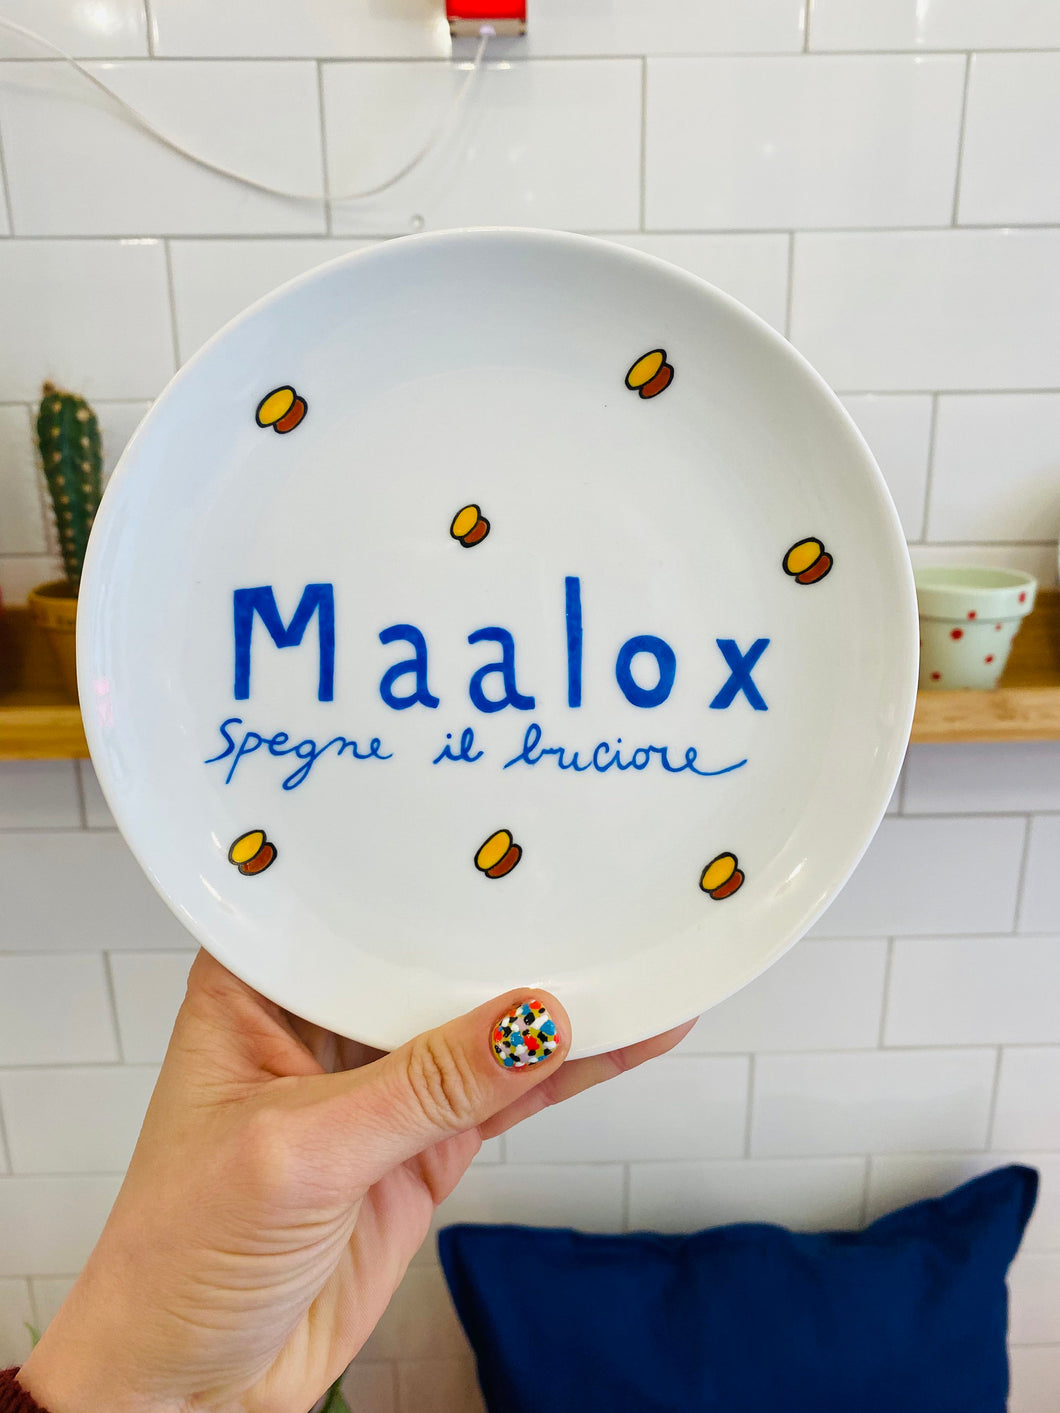 Maalox - Spegne il bruciore